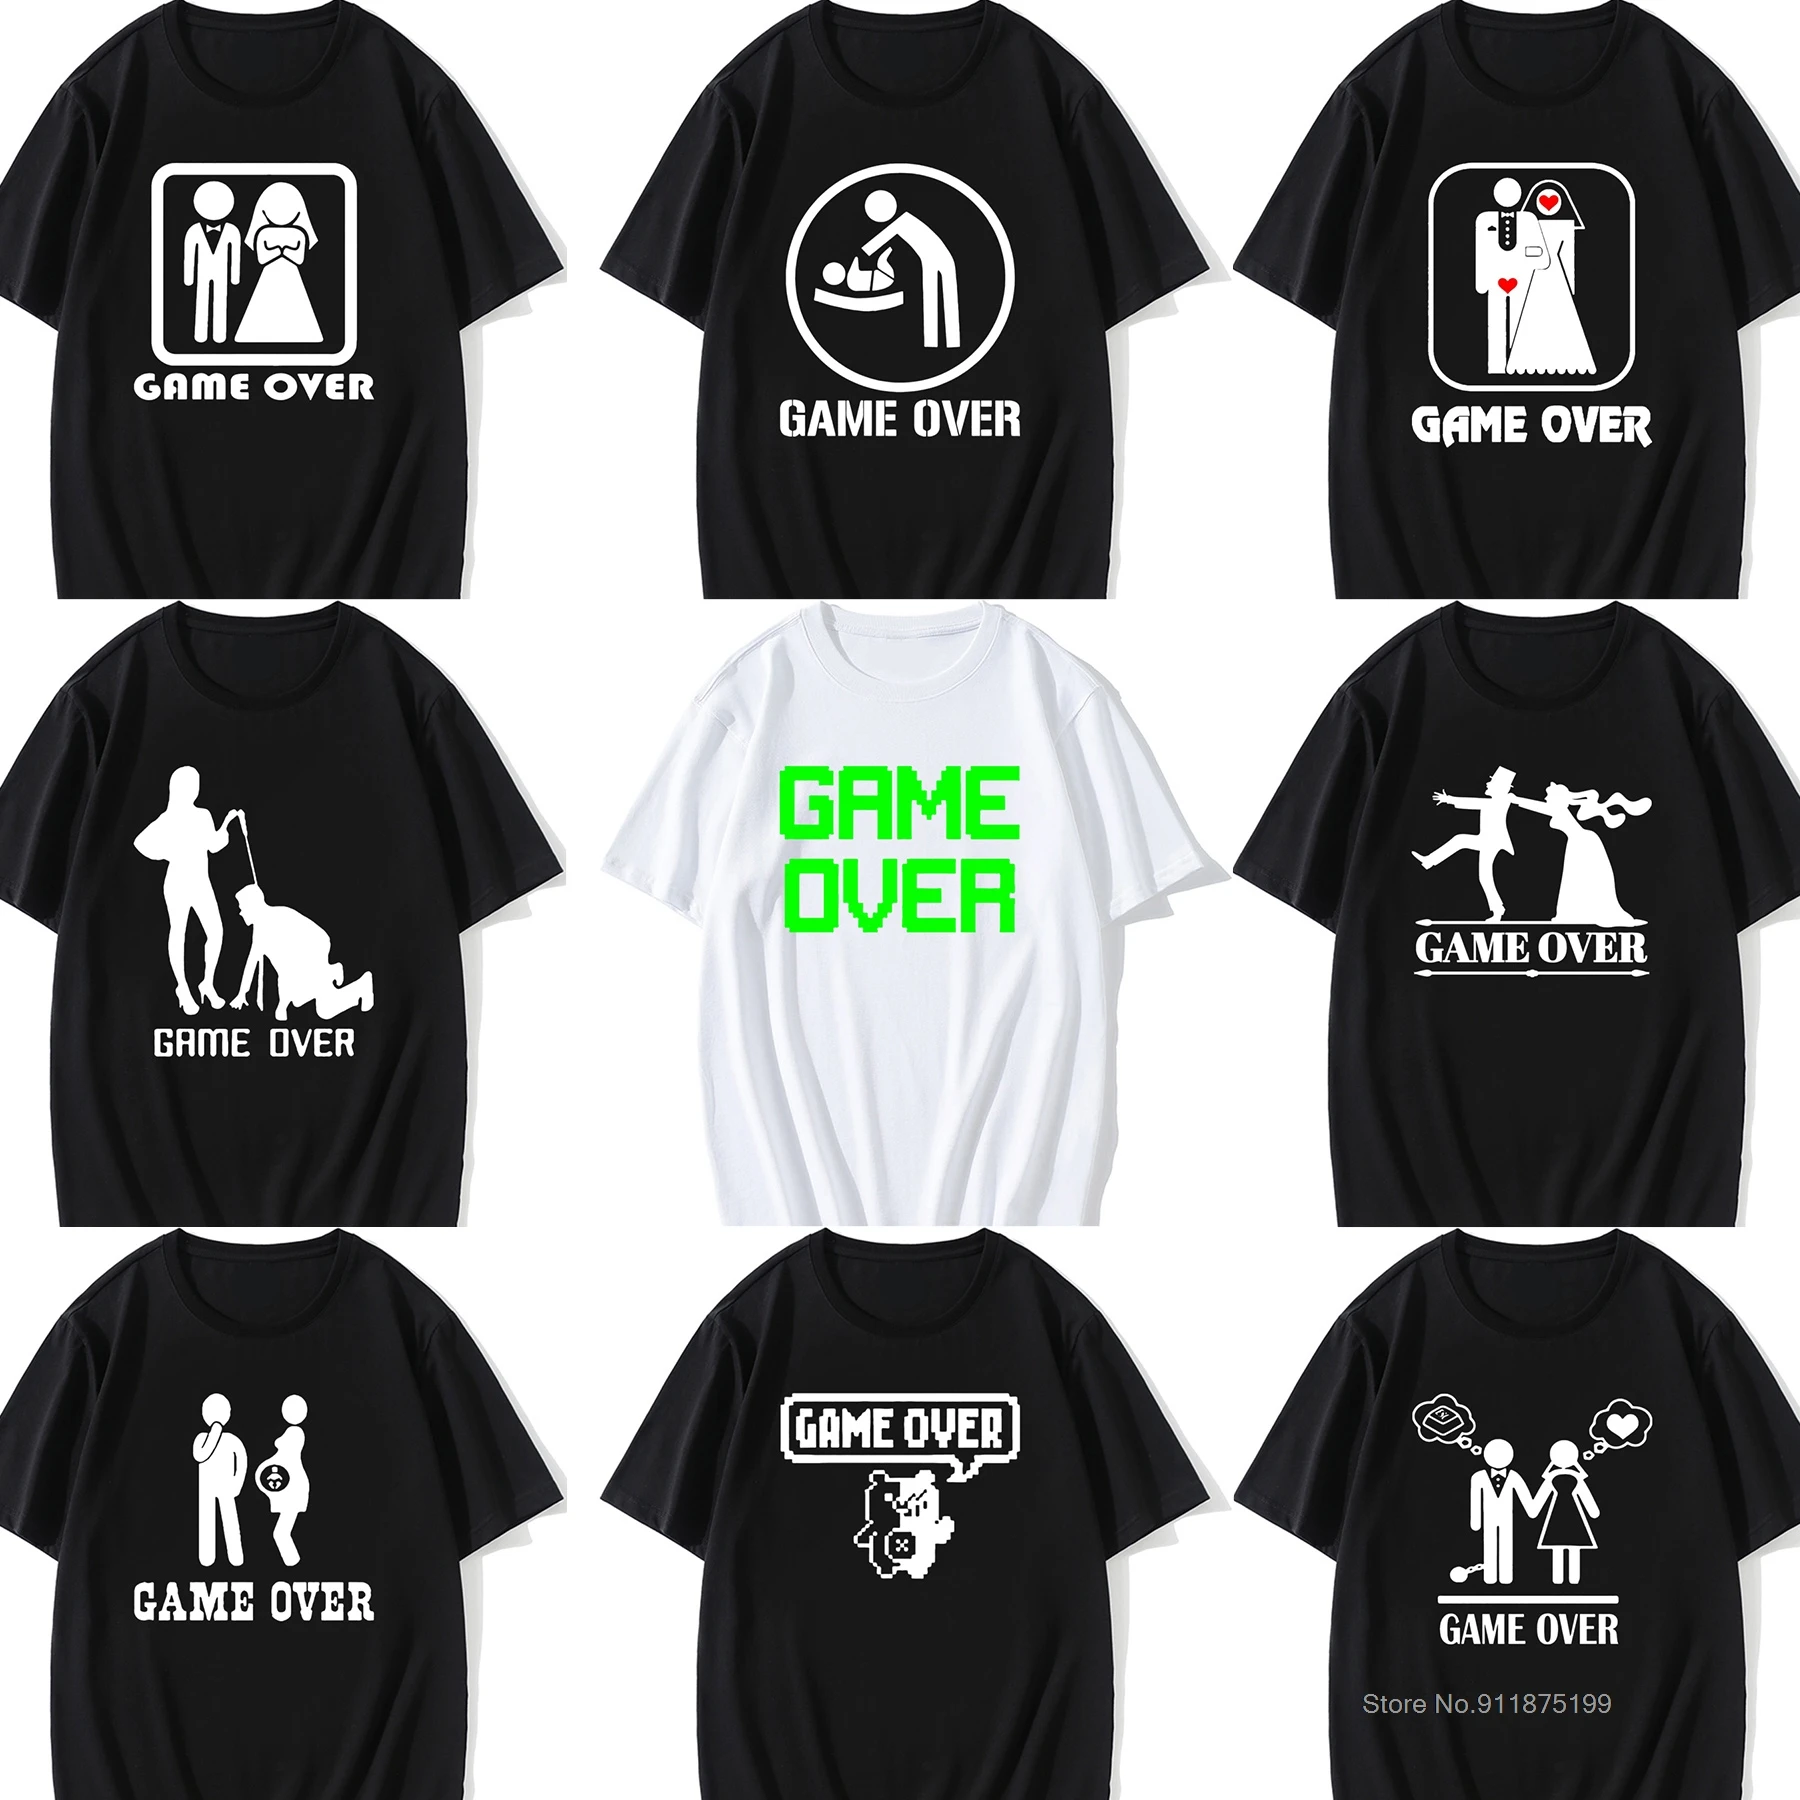 Camiseta de Game Over para hombres, ropa de despedida de soltera, divertida, de verano, para novios